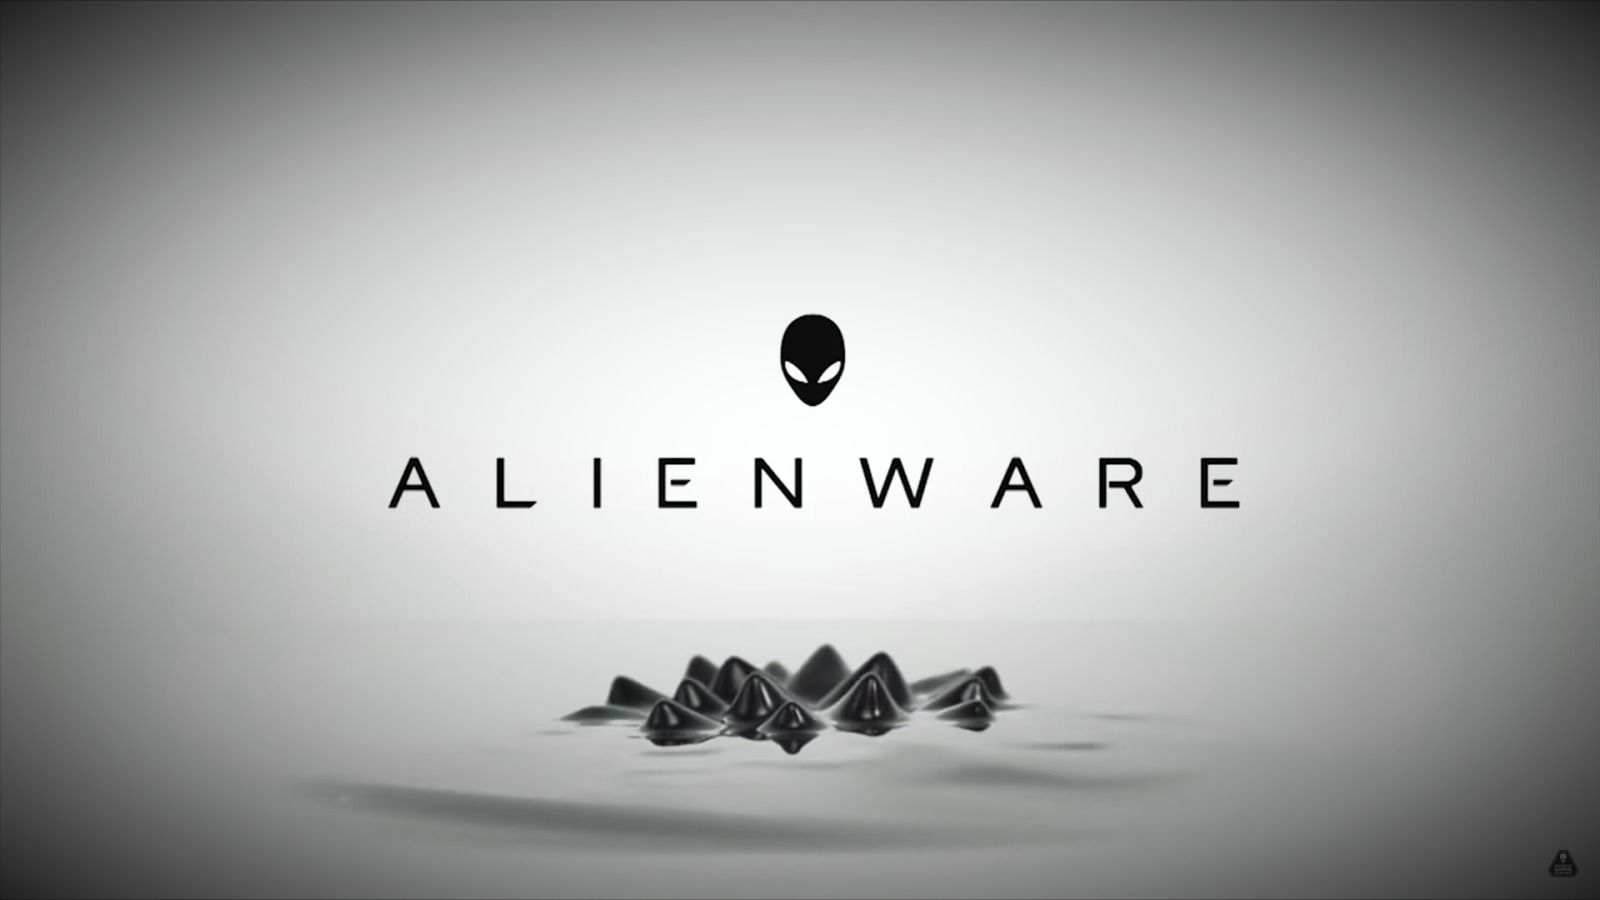 Dell Alienware Wallpaper - My Bios